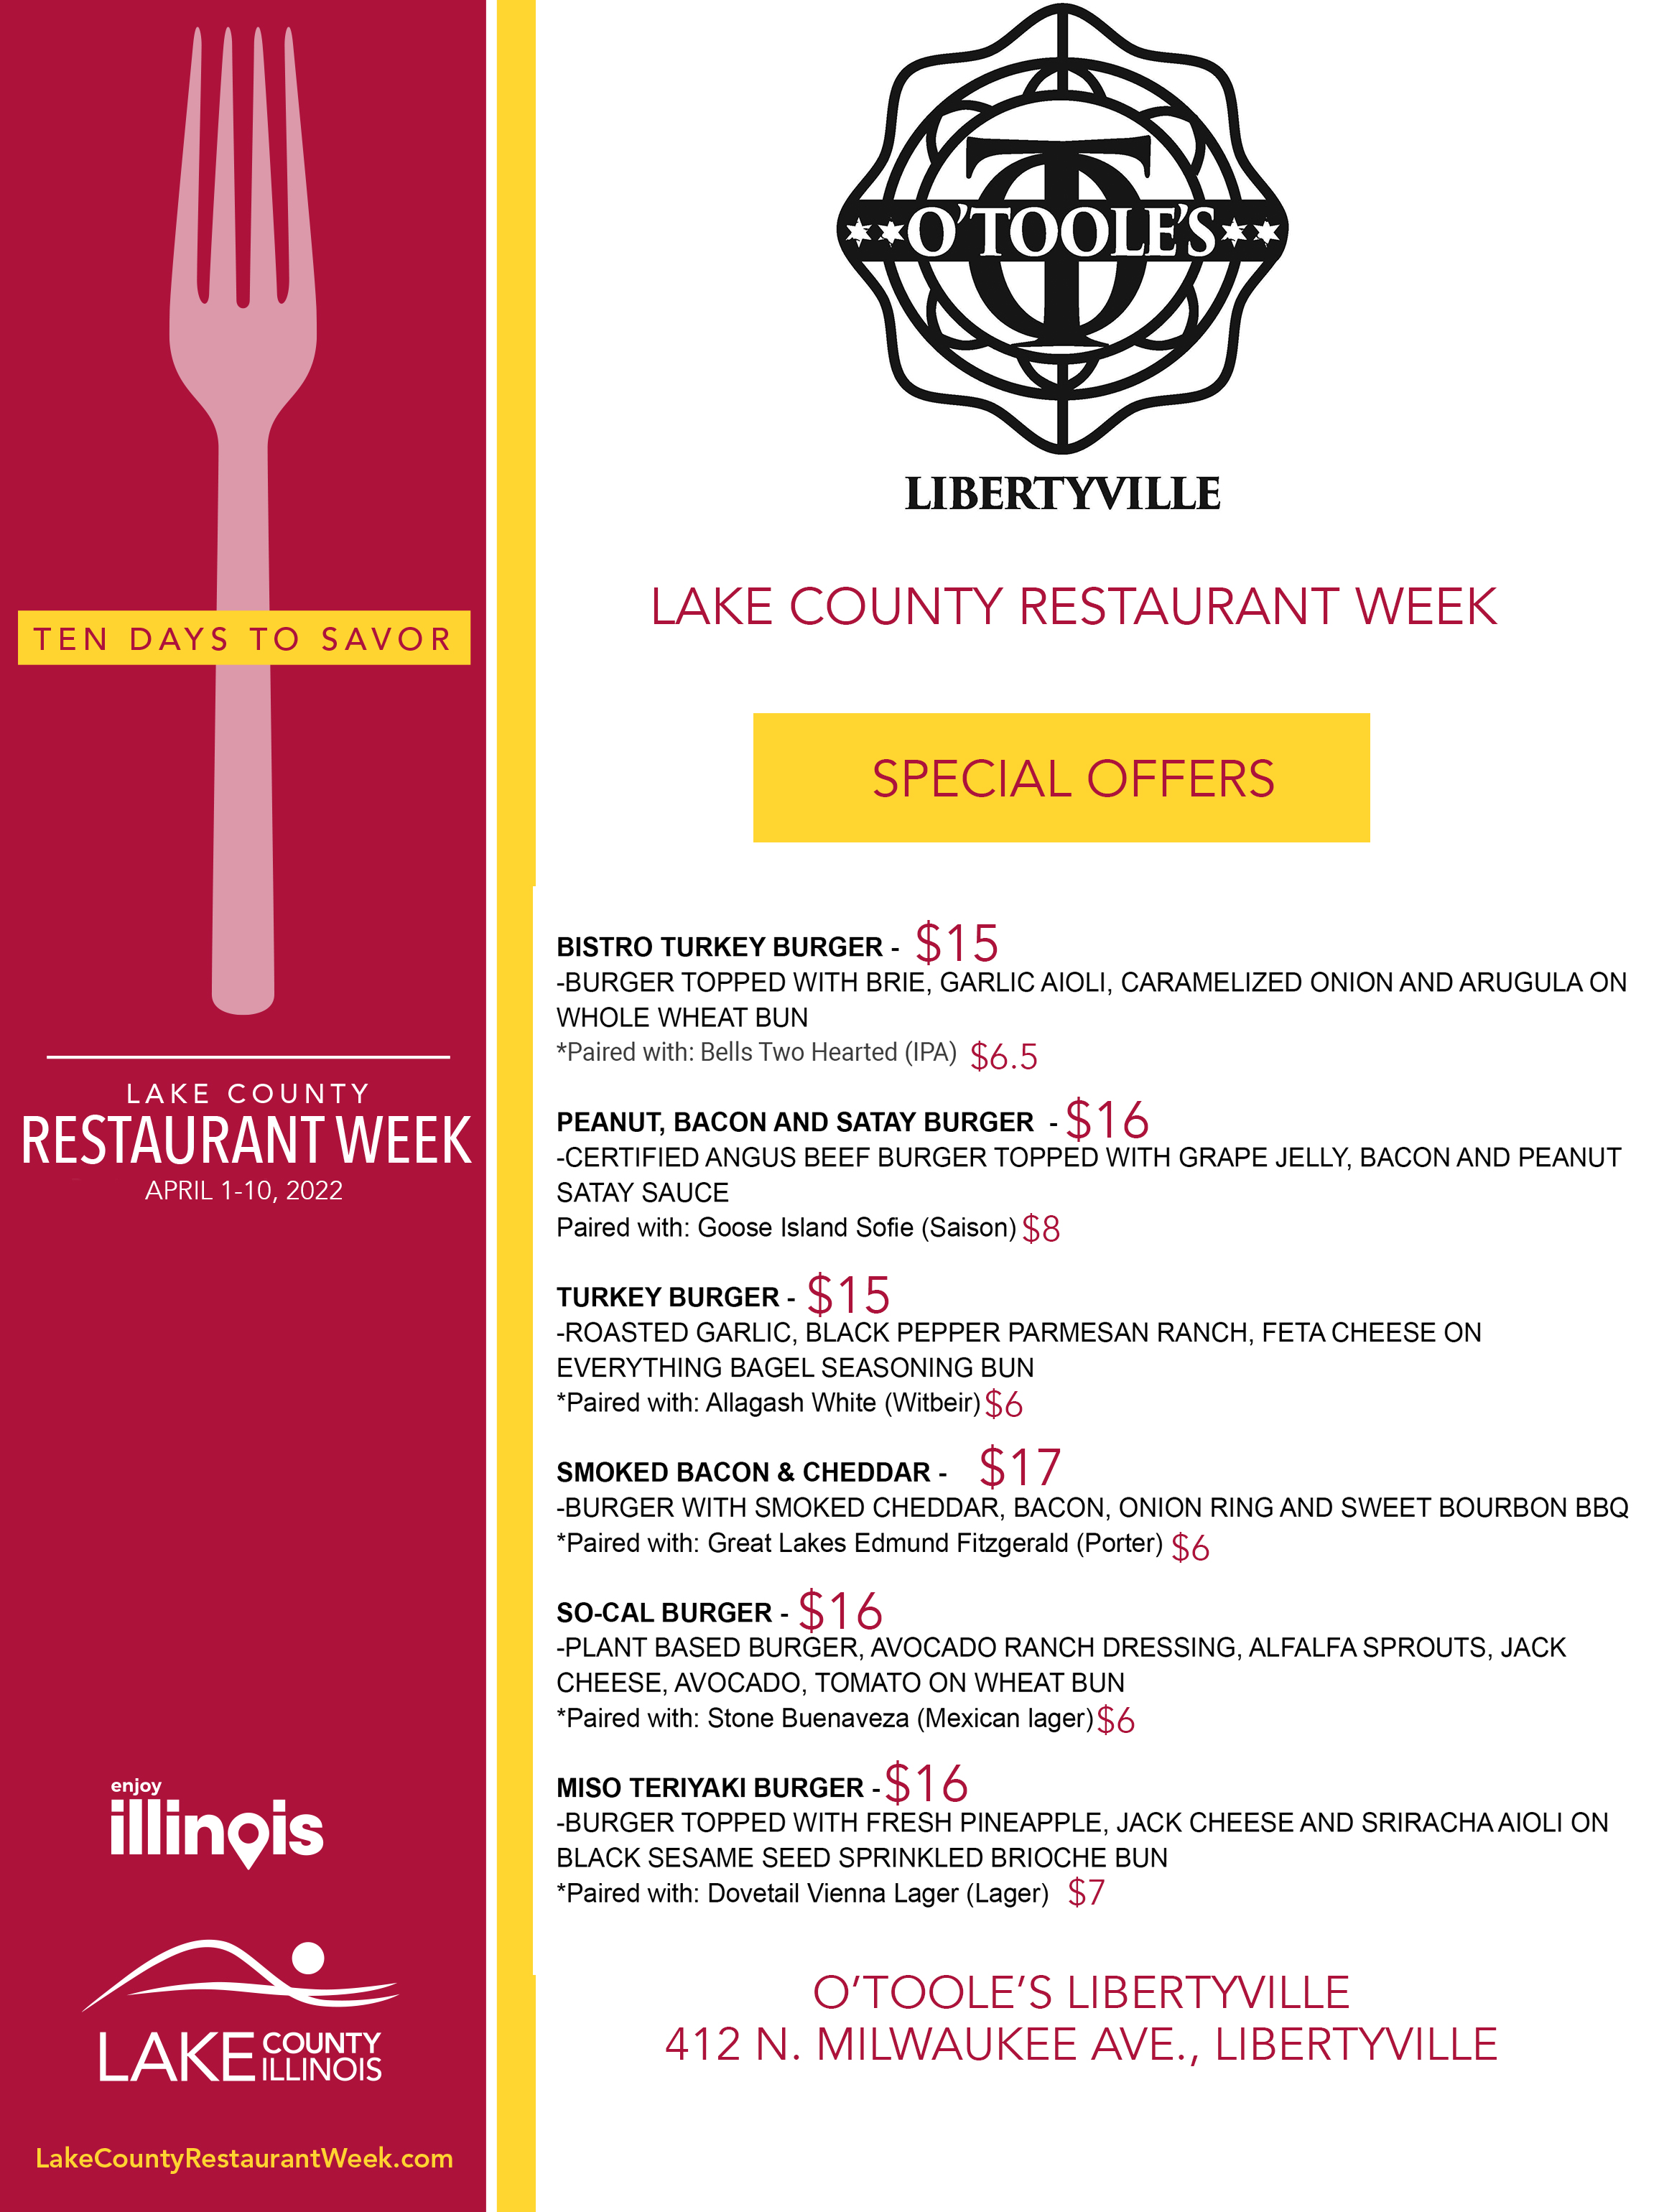 O'Toole's Libertyville Lake County Restaurant Week 2022 Menu